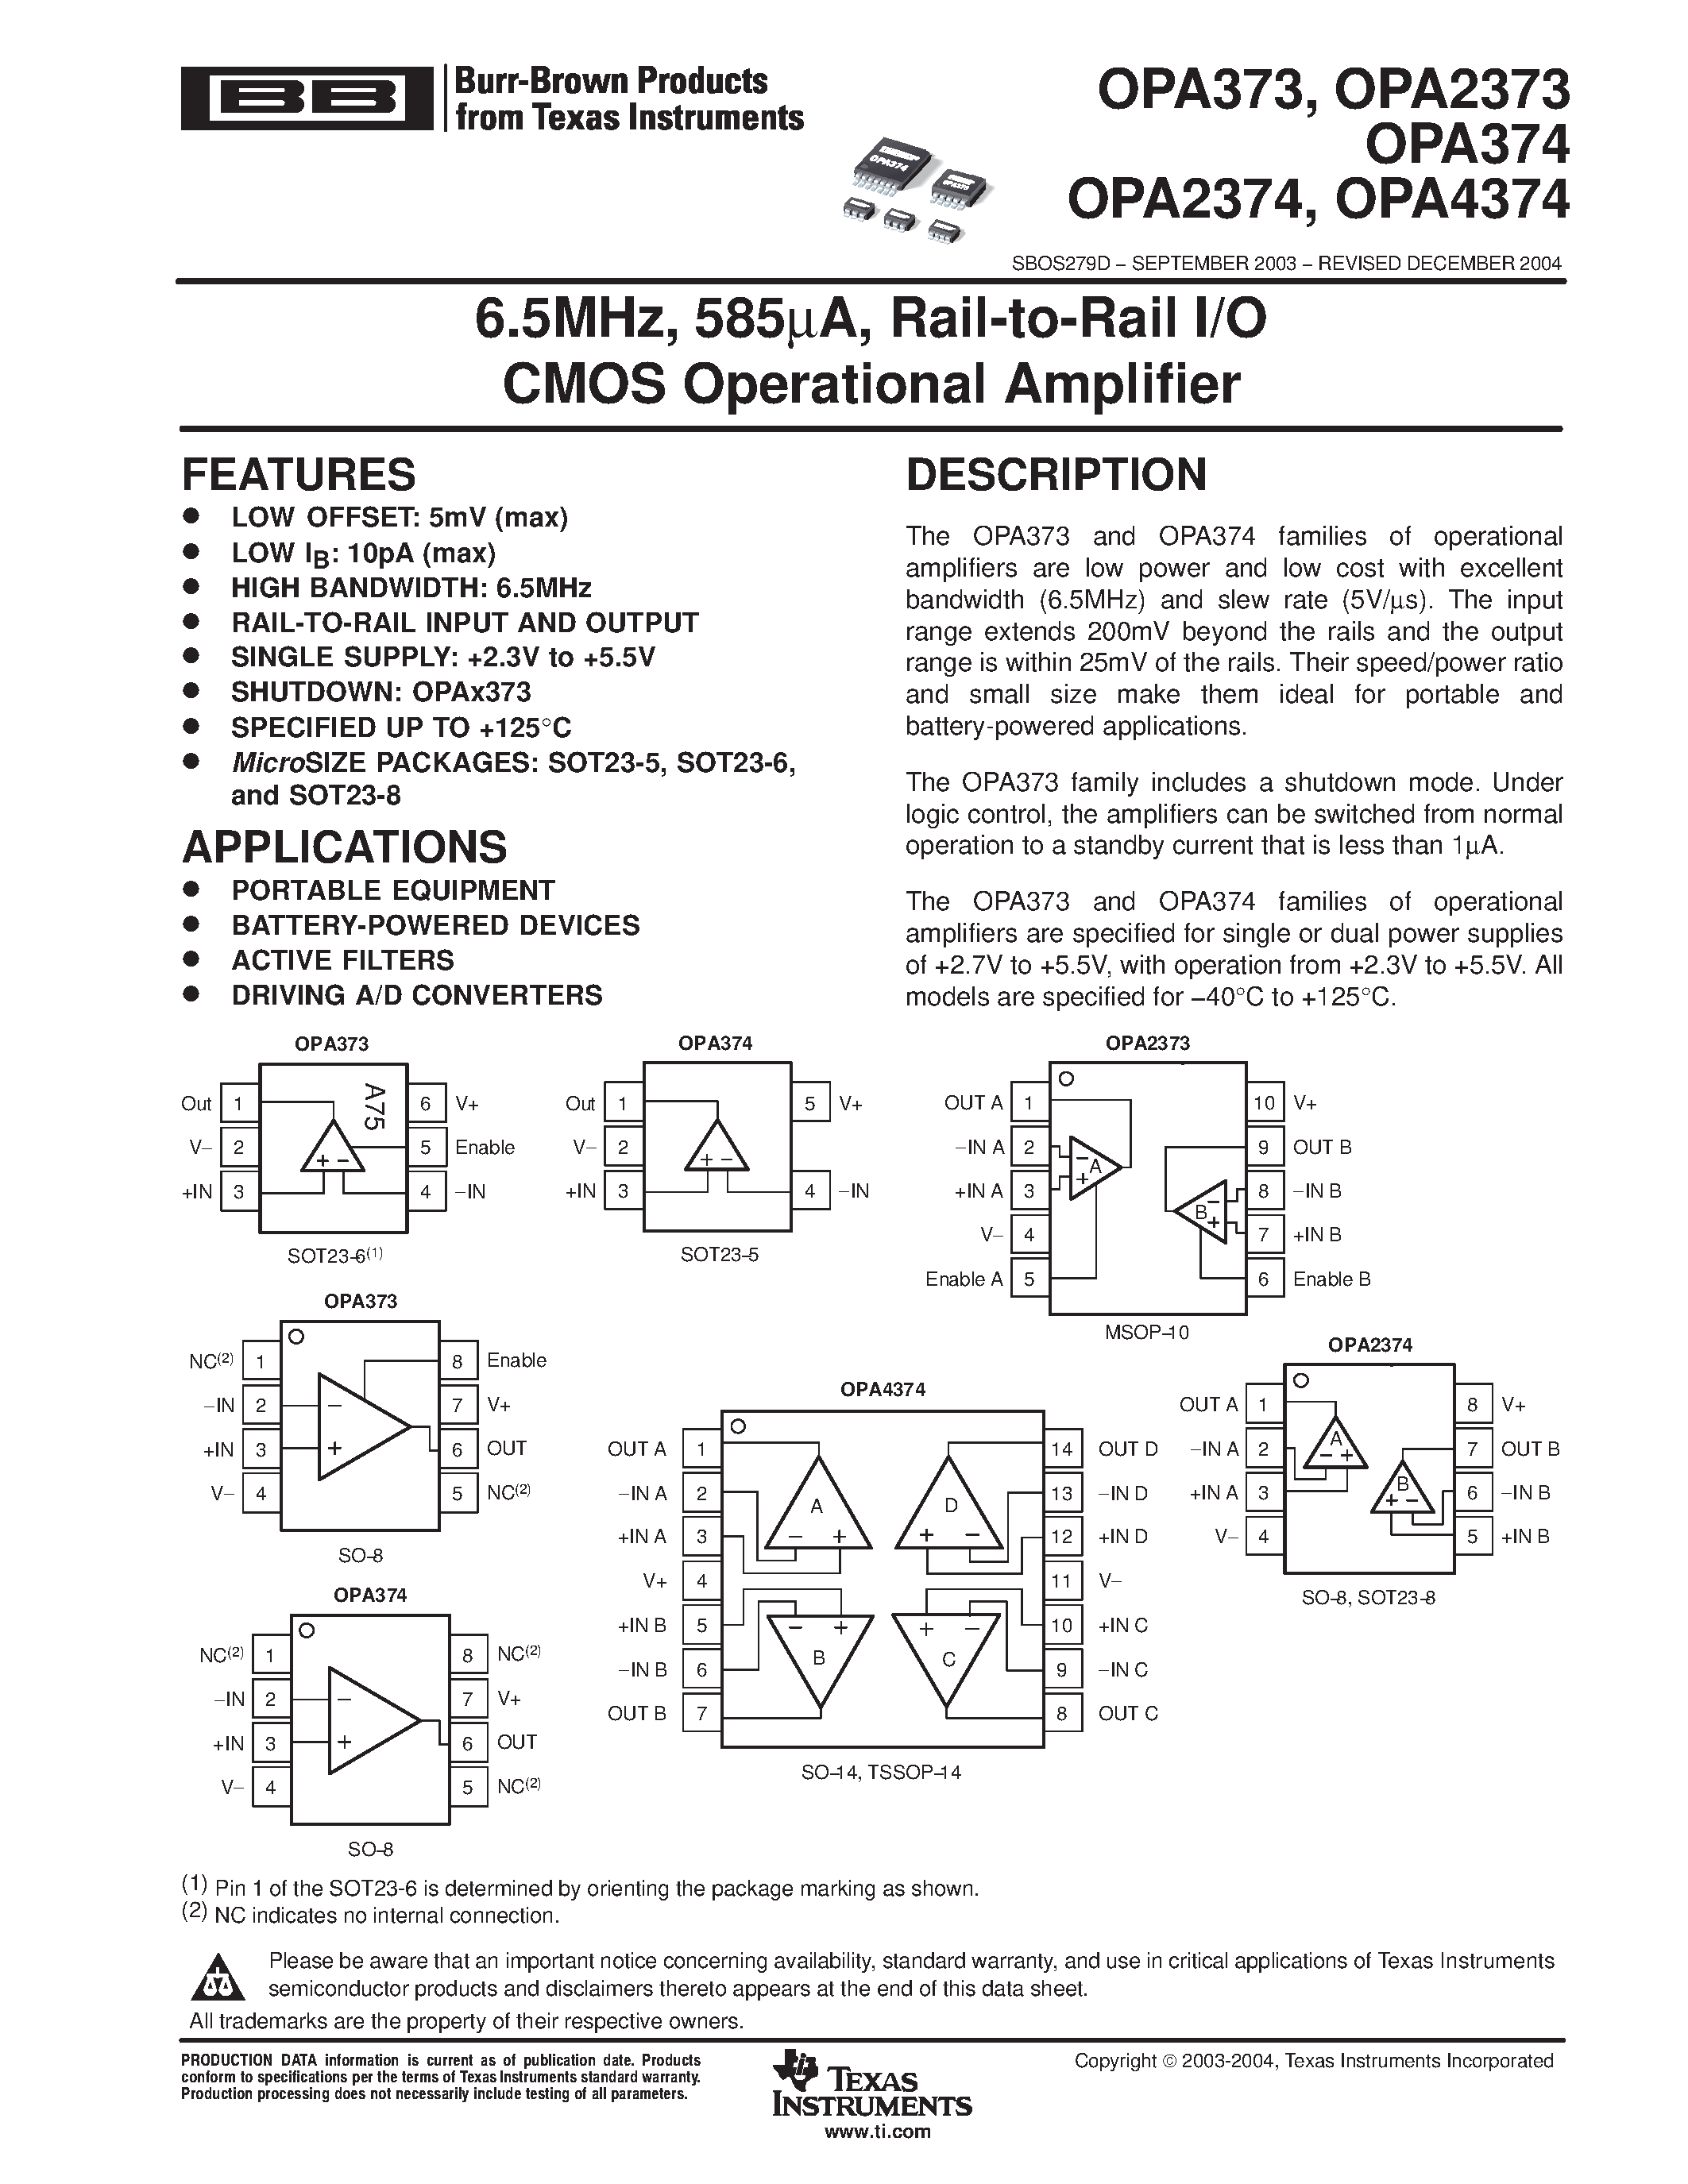 Datasheet OPA2374 - 6.5MHz / 585UA / Rail-to-Rail I/O CMOS Operational Amplifier page 1